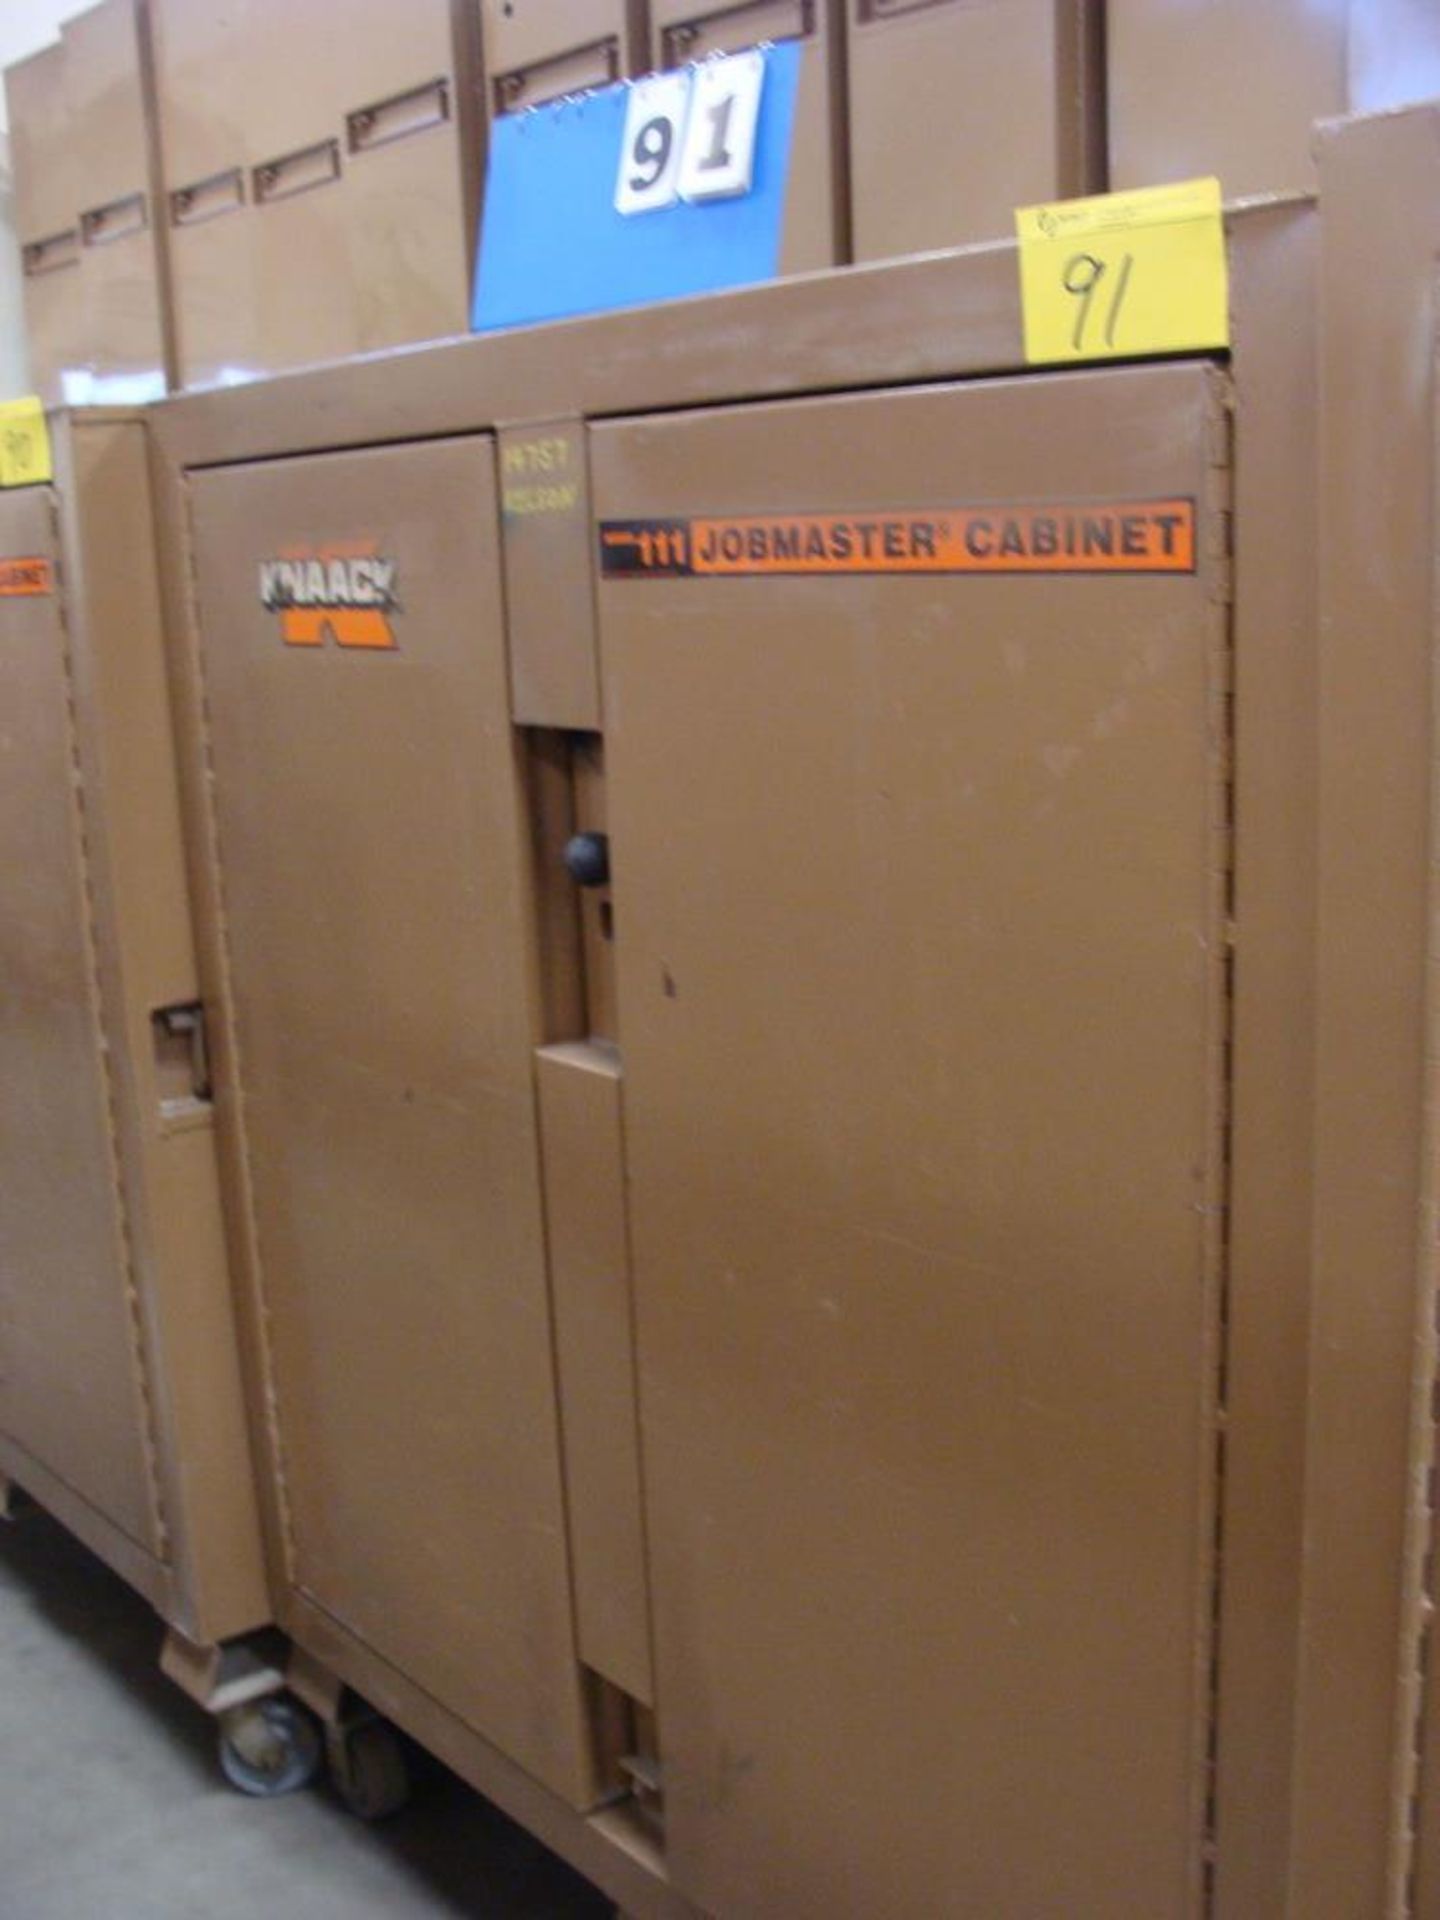 KNAACK JOBMASTER 2-DOOR JOB BOX, MODEL III, 24"W X 60"L X 57"H